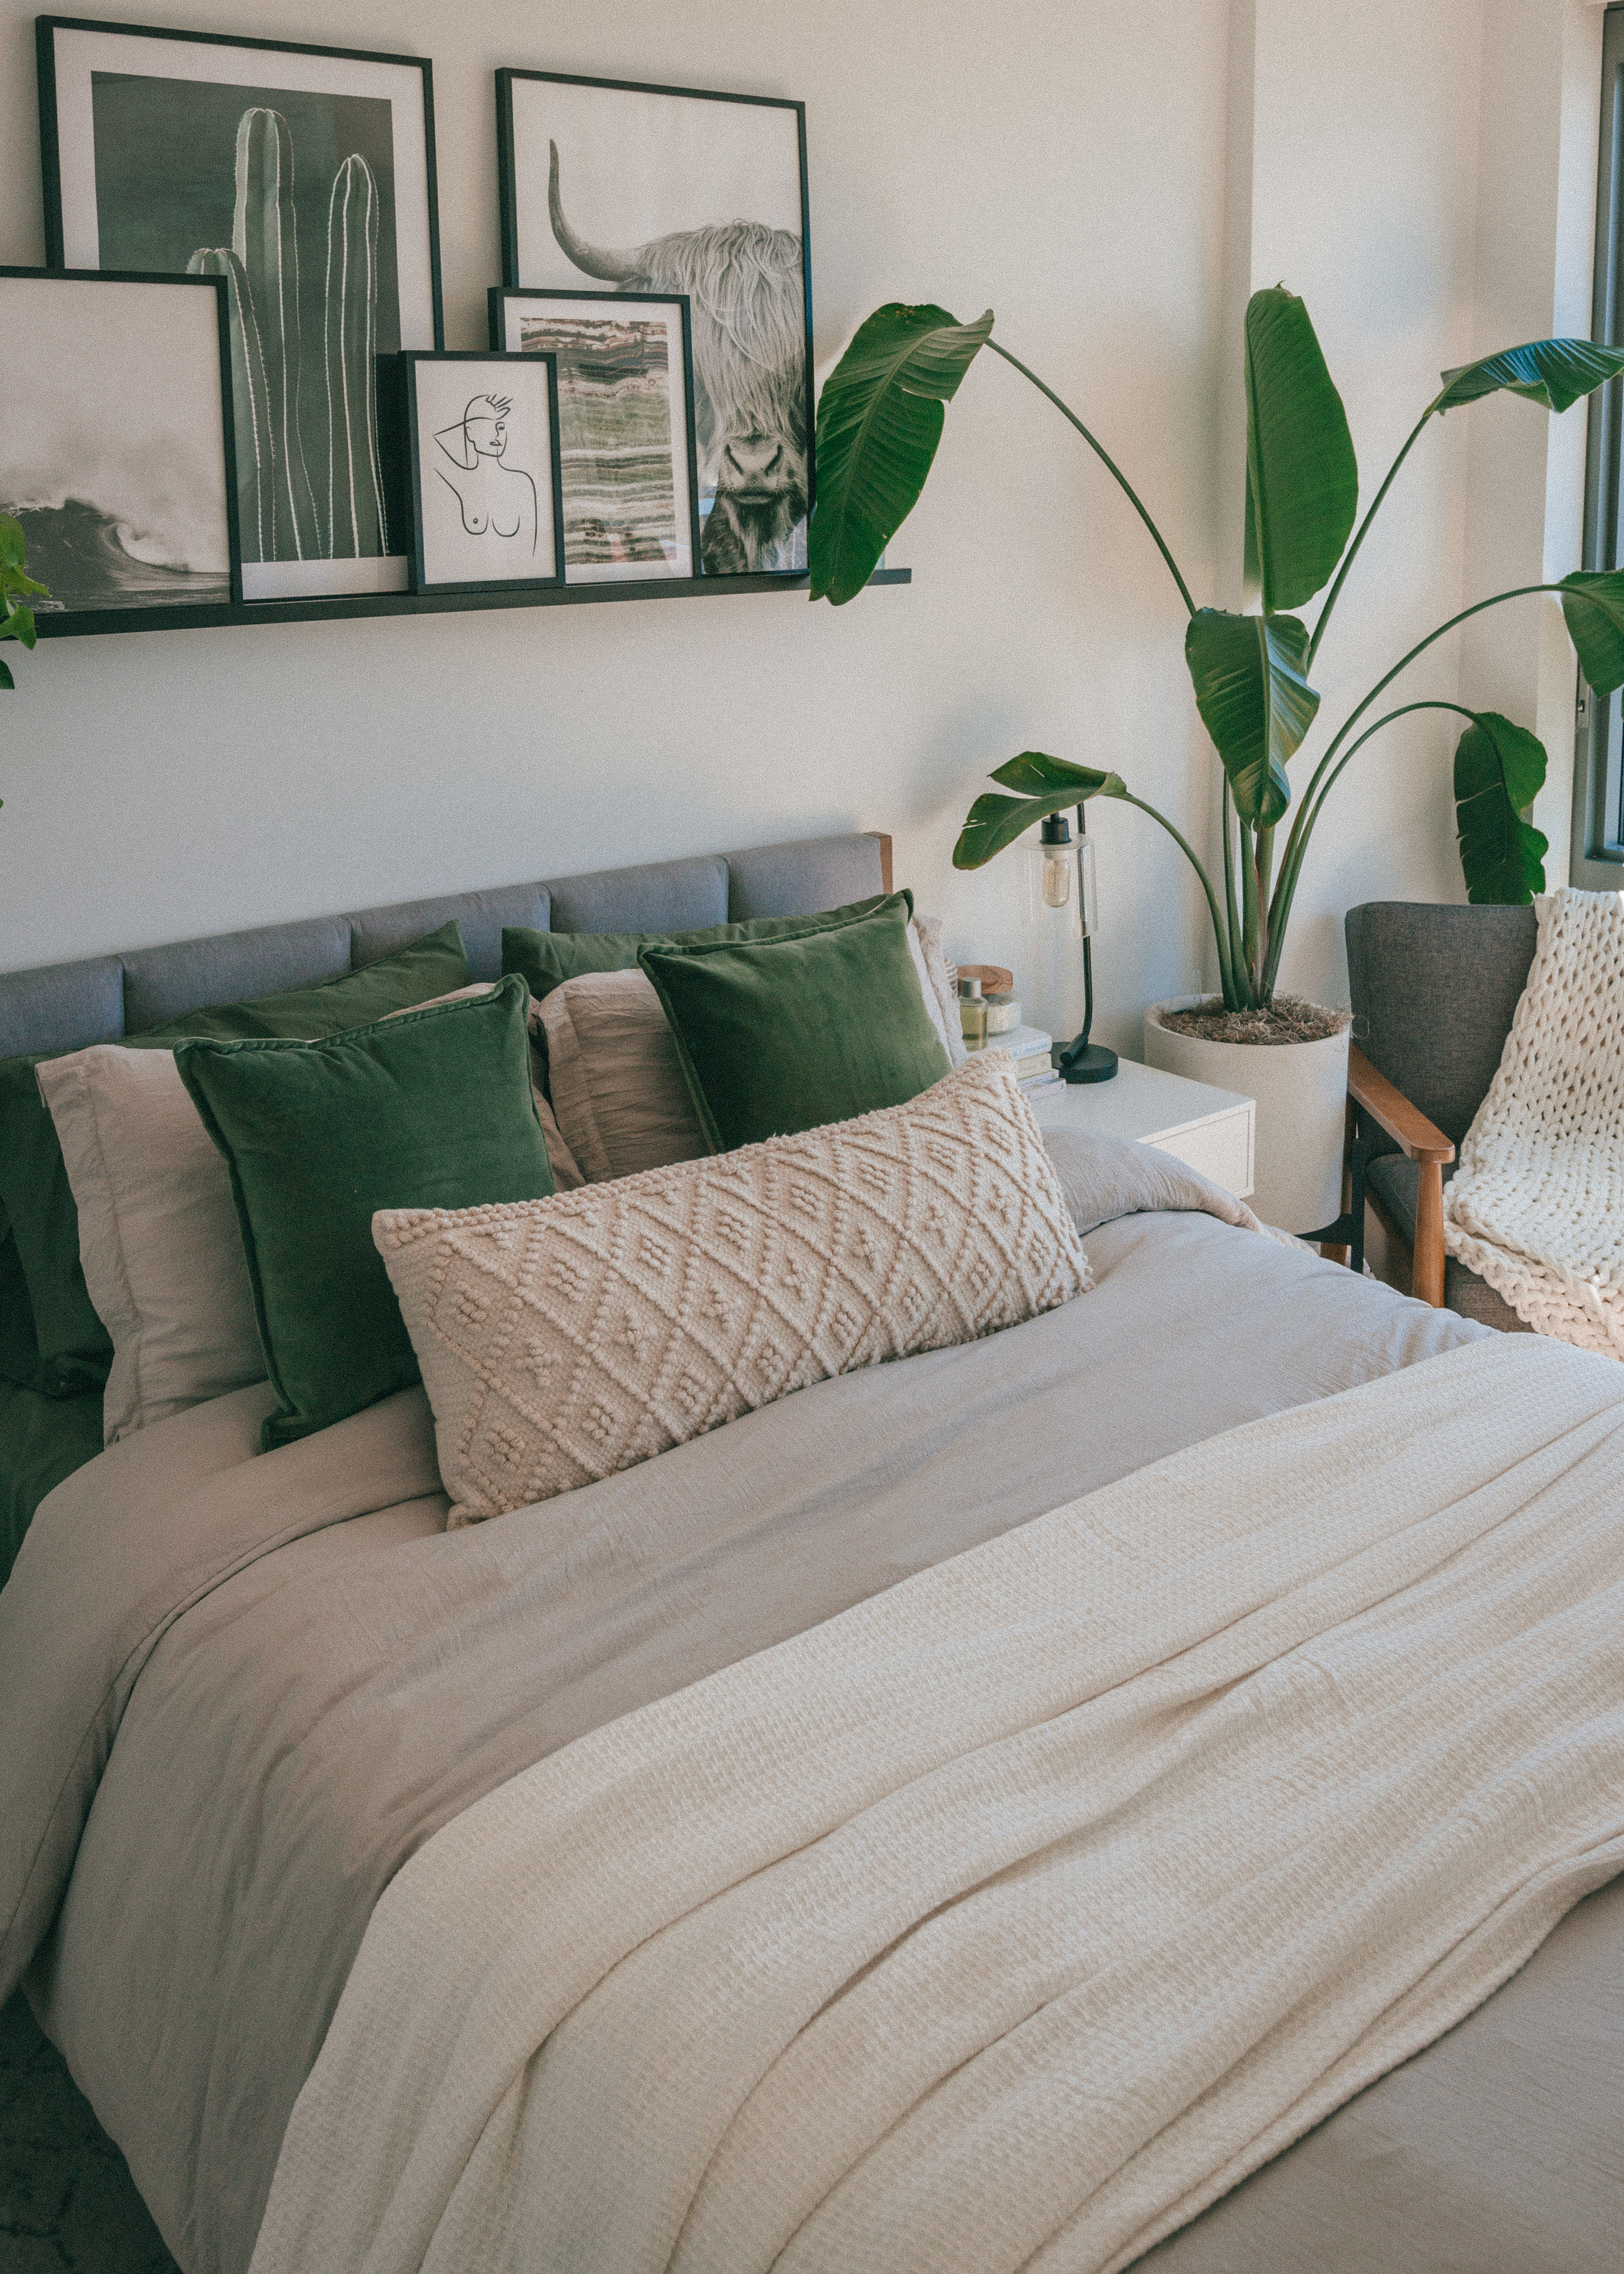 Apartment Bedroom Pillows Lifestyle Decor Mid Century Cozy Home